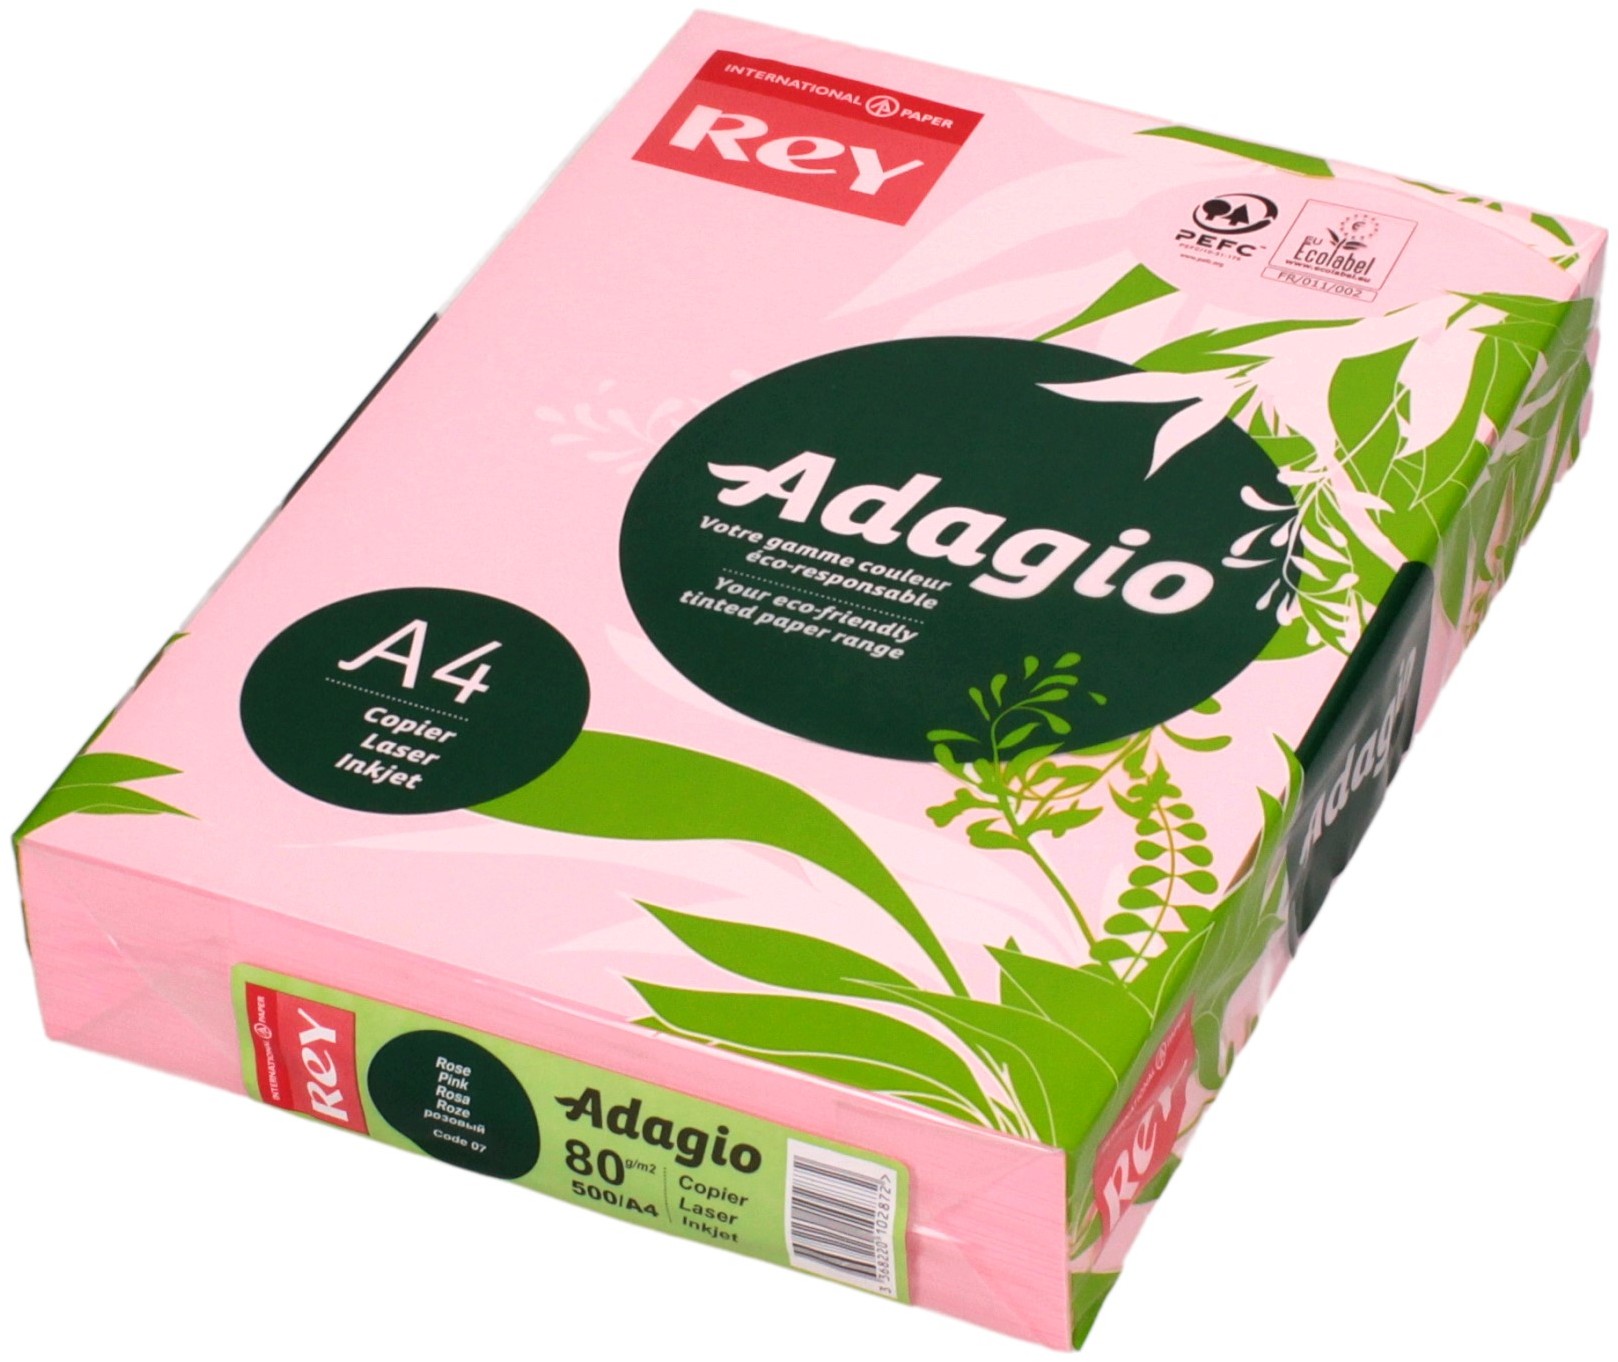 Adagio Papier ksero A4 80g różowy 7